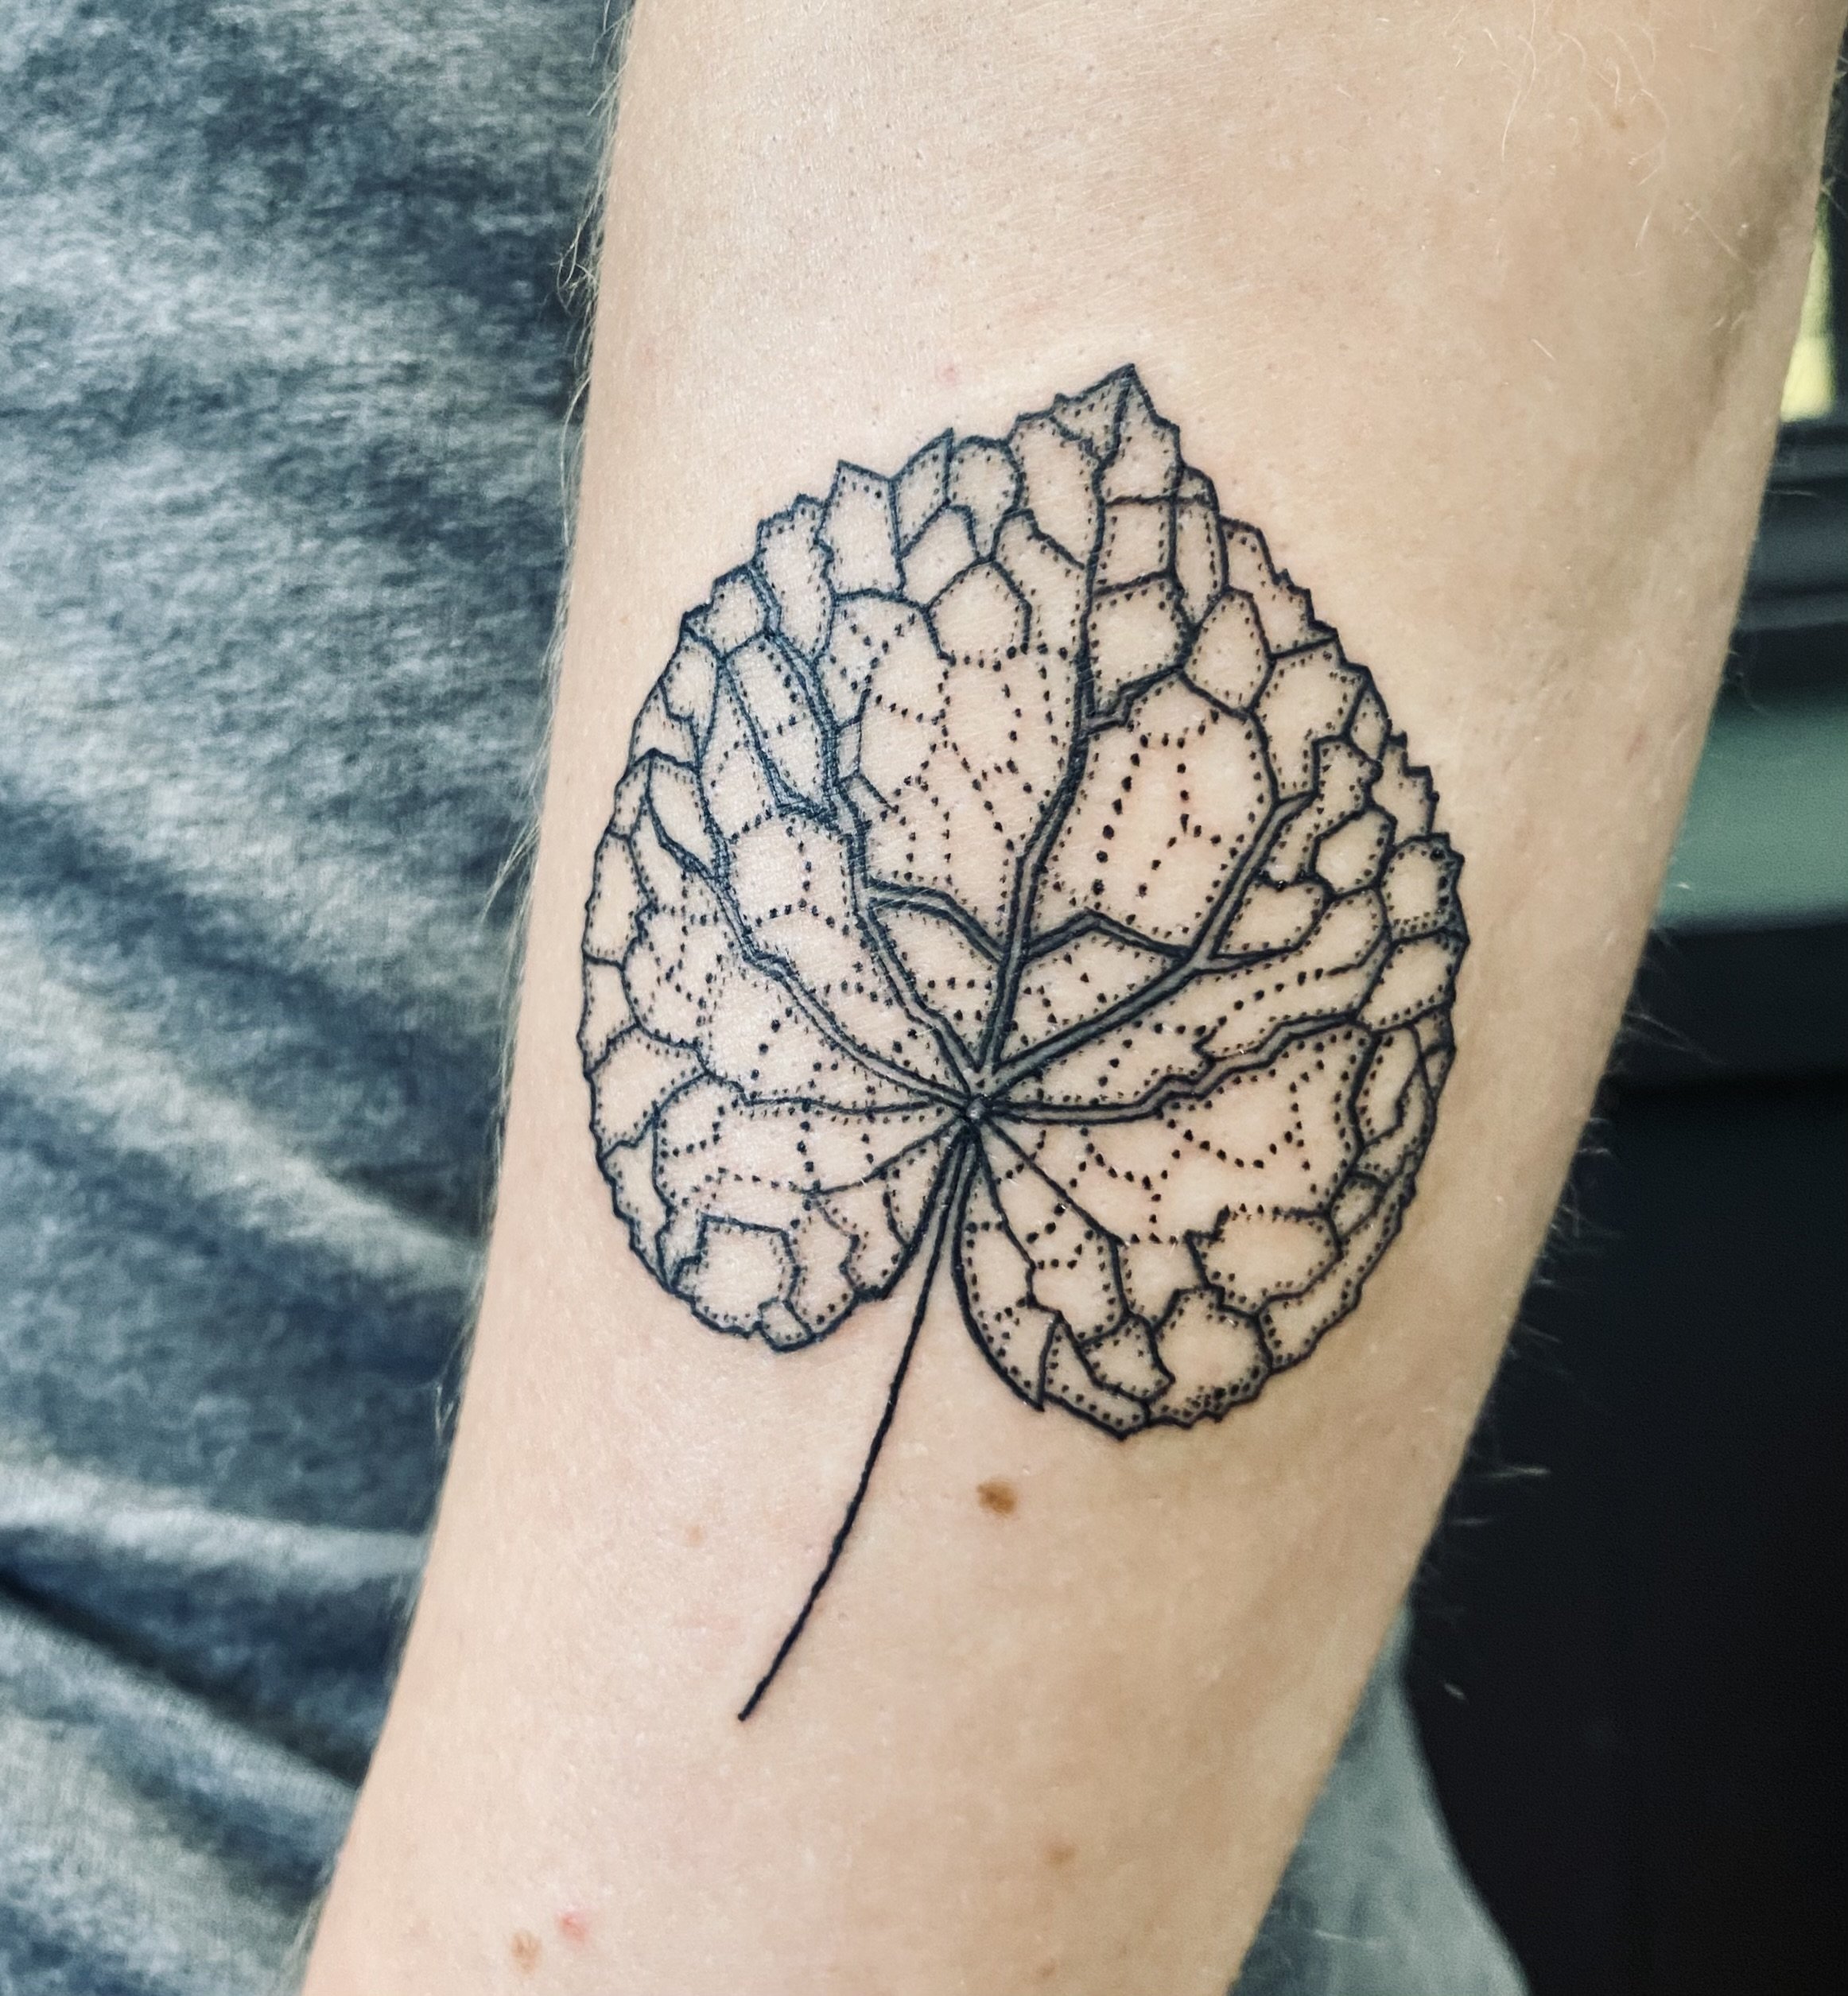 Single needle aspen leaf. Tattoo shared by caspermugridge (Best Tattoos) |  Cool tattoos, Tattoos, Leaf tattoos